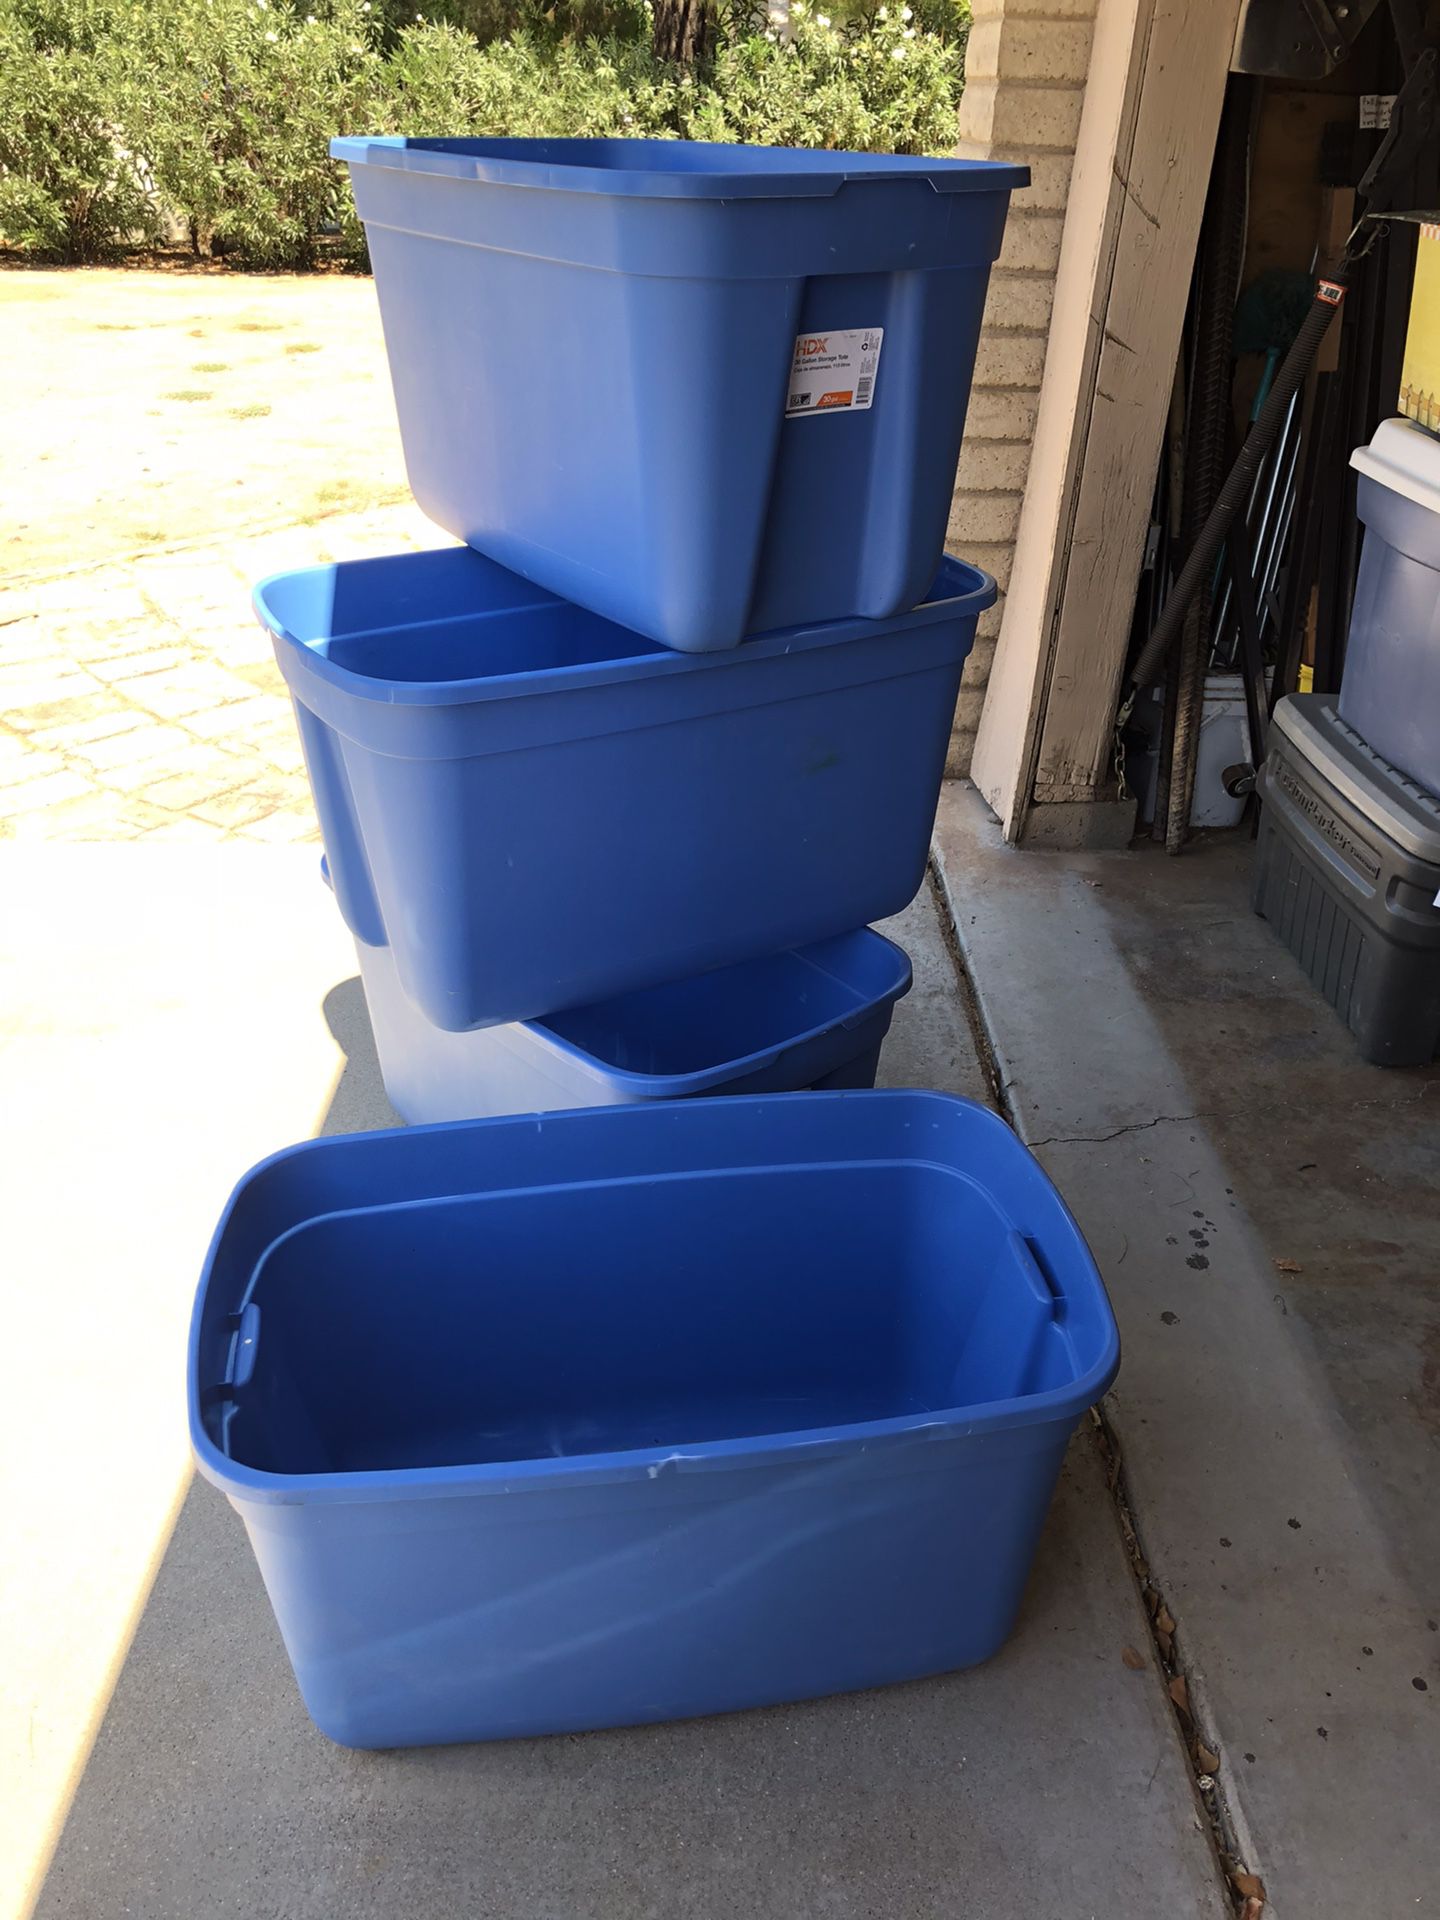 4 Storage tubs Only NO LIDS - 30 gallon blue plastic, HDX - Home Depot brand